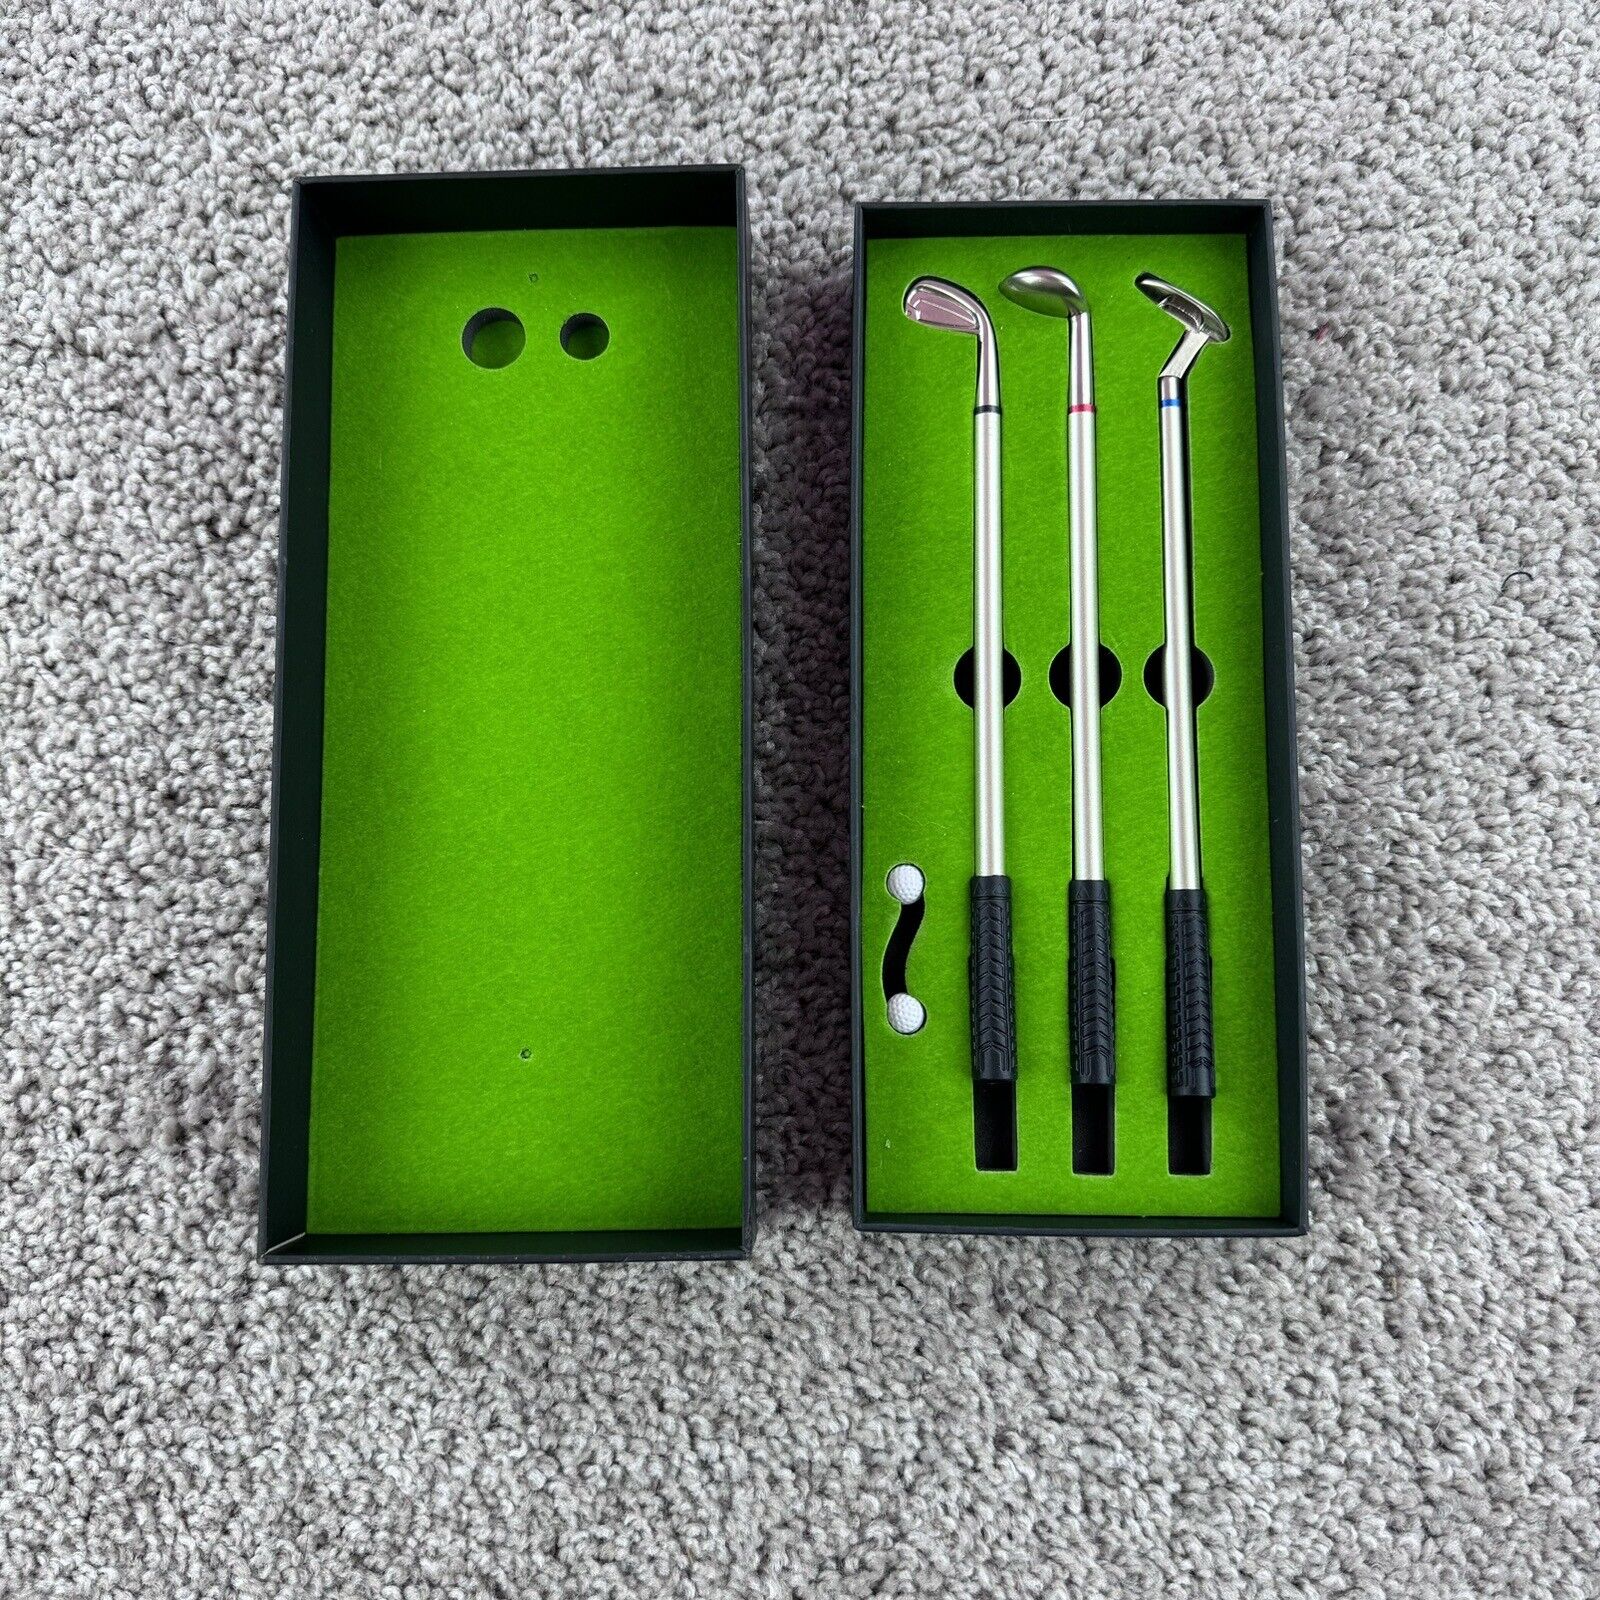 Desktop Golf Set 3 Clubs 2 Balls Pens Putting Green Novelty Distraction Toy Game